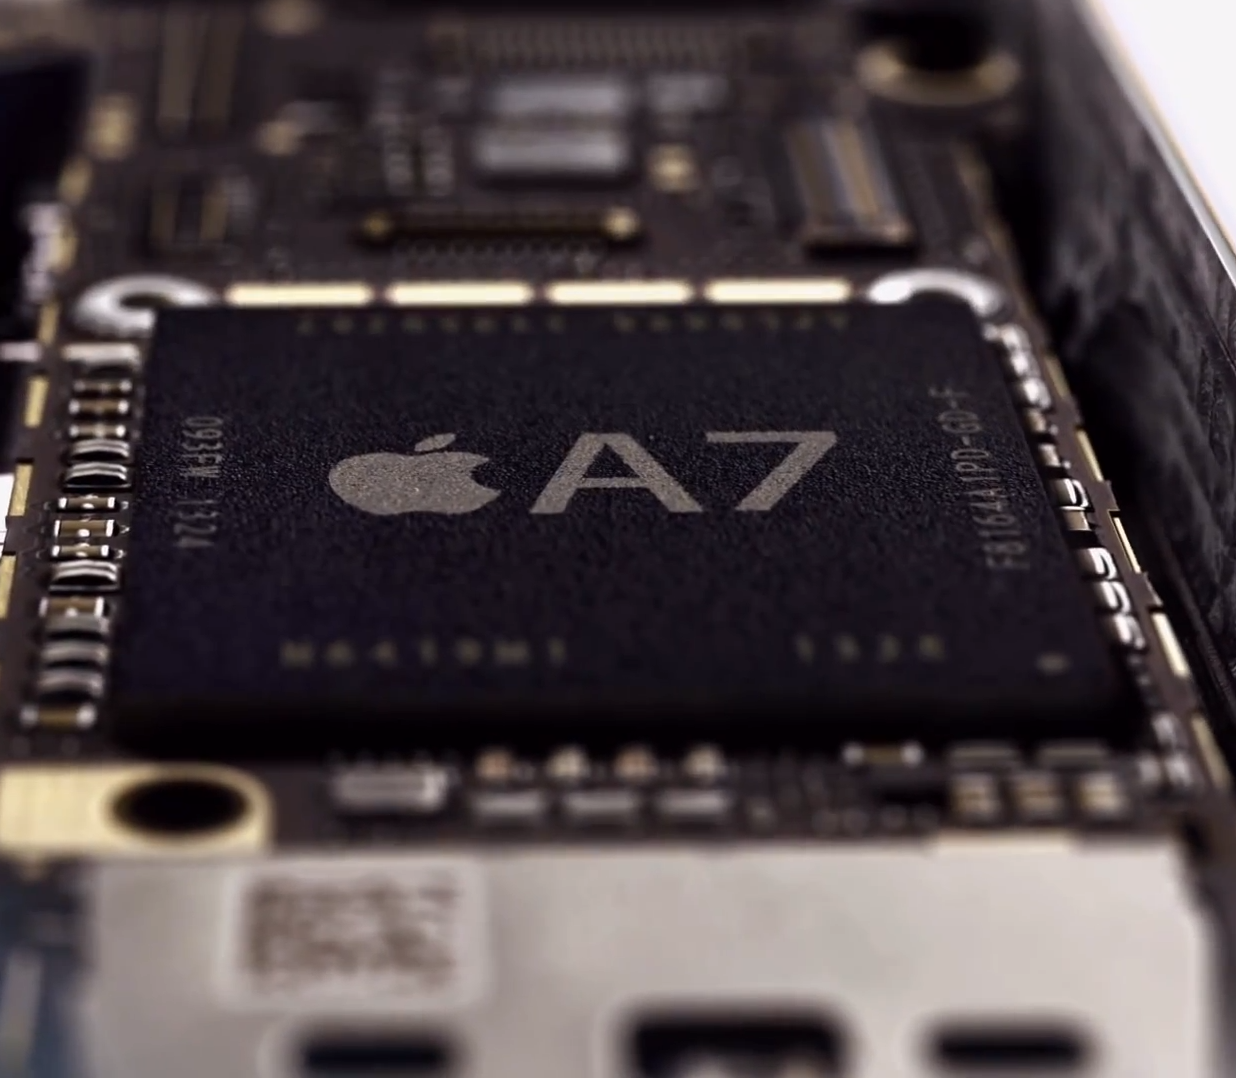 Qualcomm Says Apple&#039;s 64-Bit A7 Processor is a &#039;Marketing Gimmick&#039;